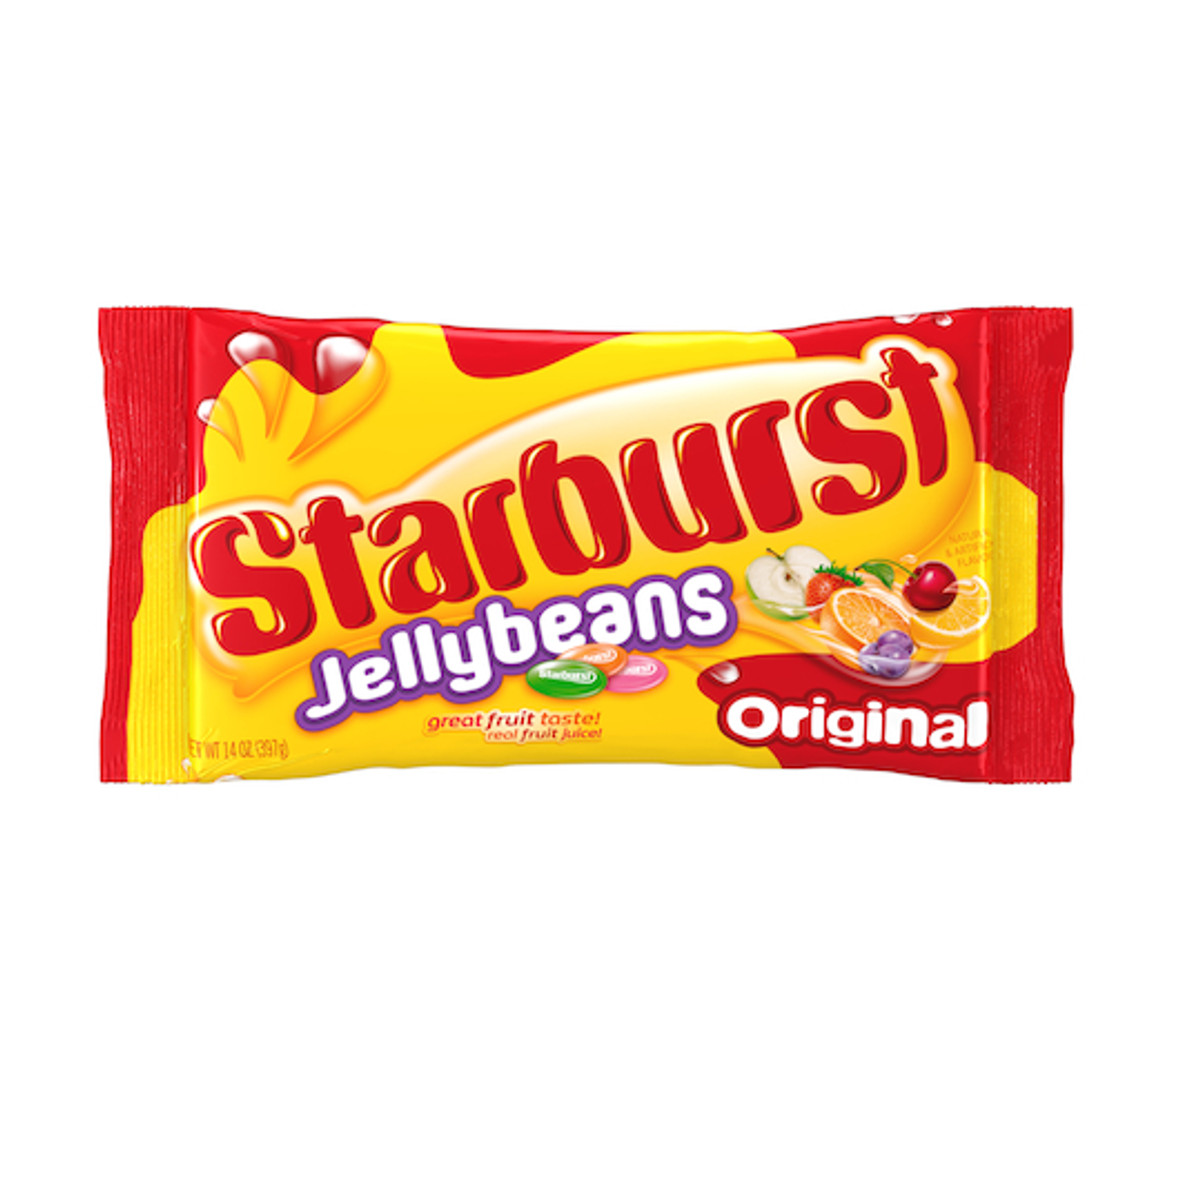 Starburst Original Jellybeans, 14 Ounce, 12 Per Case